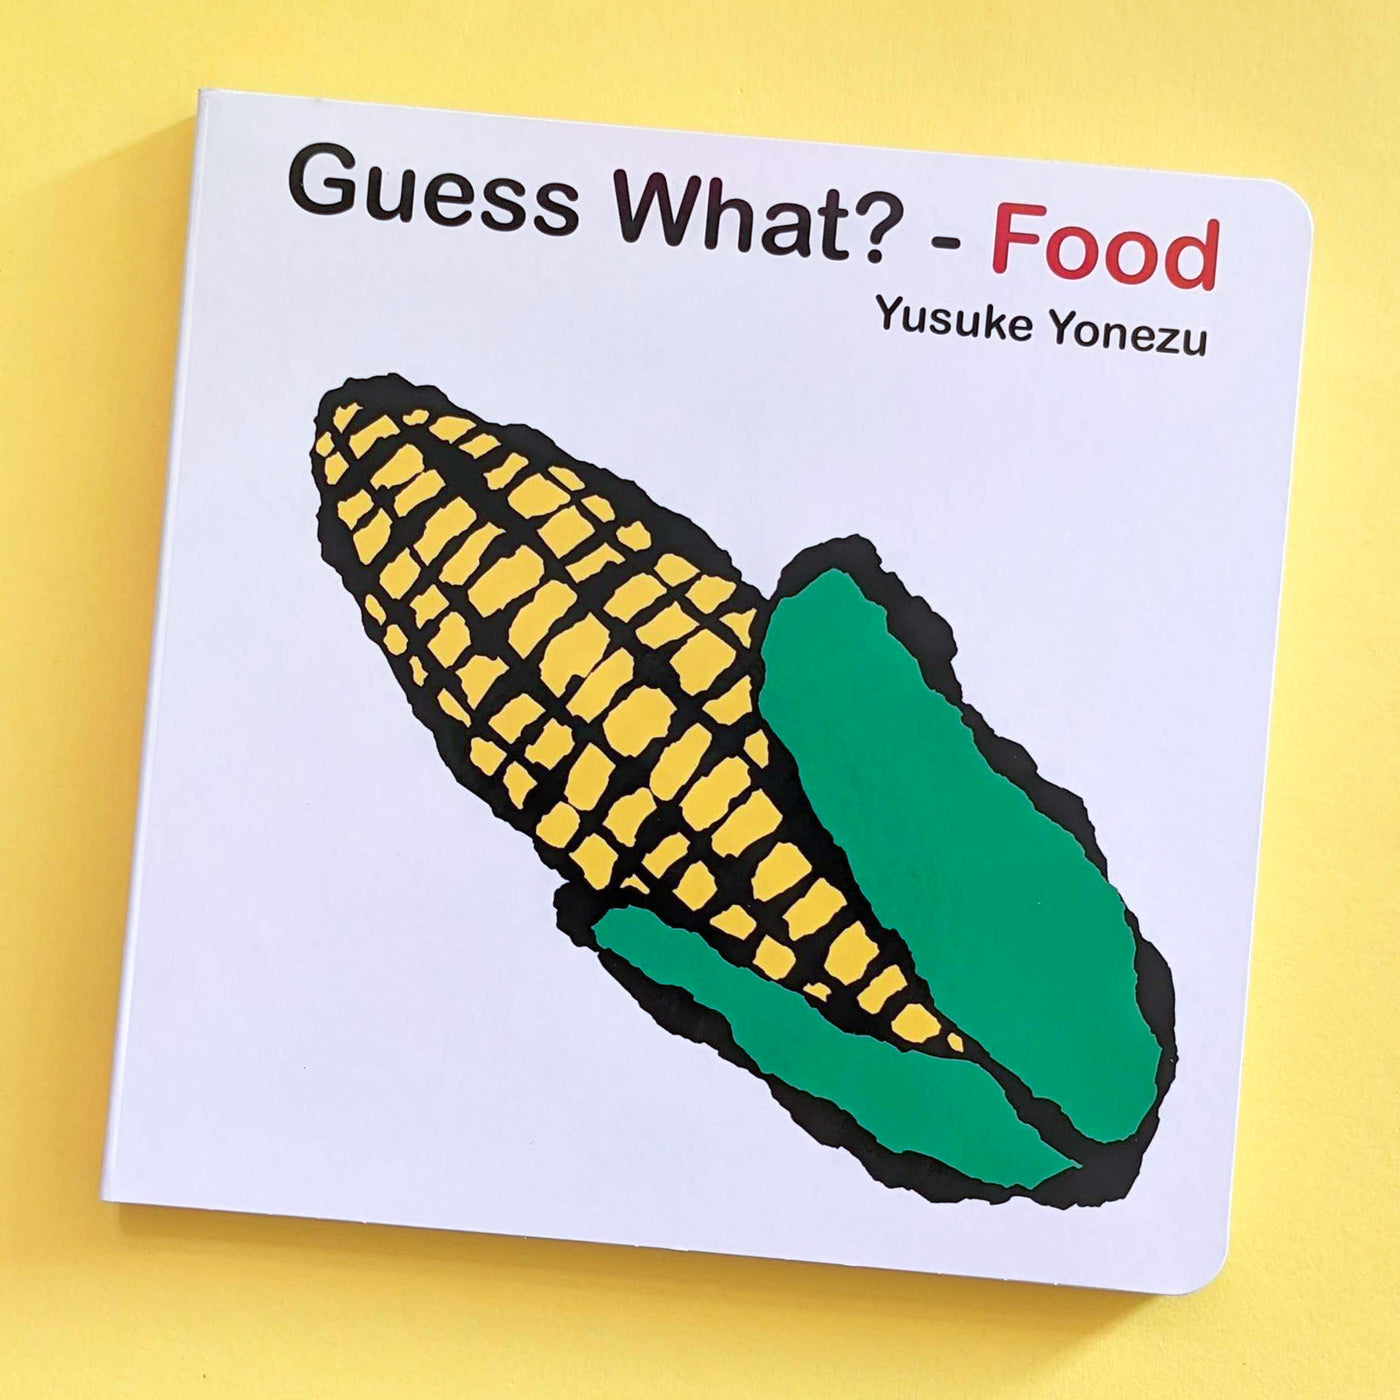 Guess What-Food? by Yusuke Yonezu